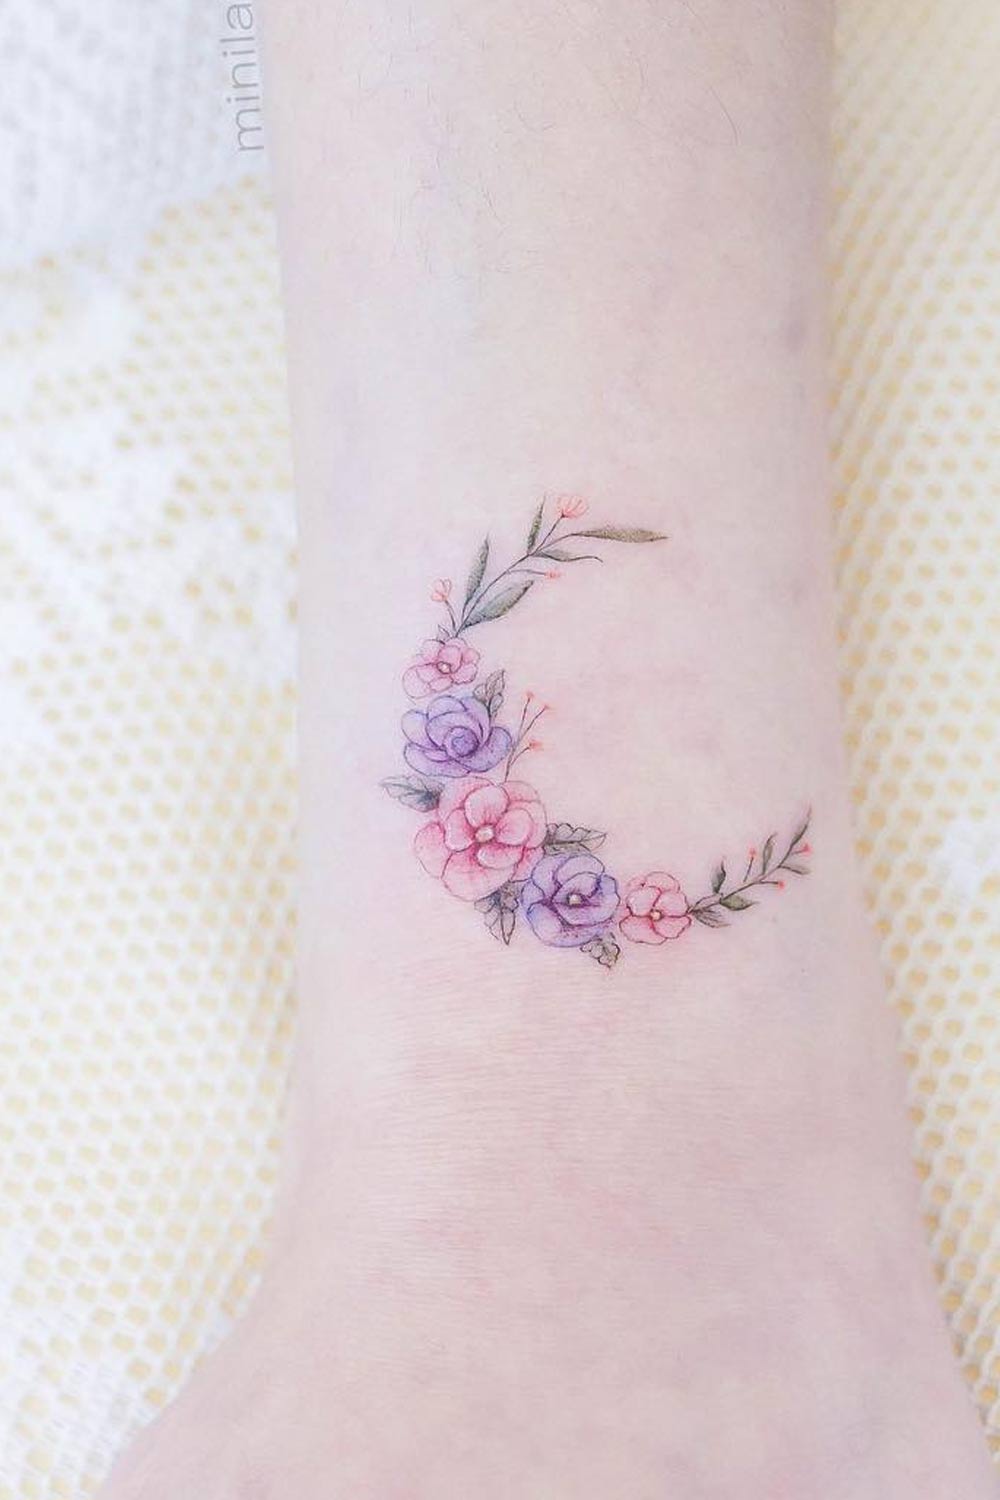 Floral Moon Tattoo